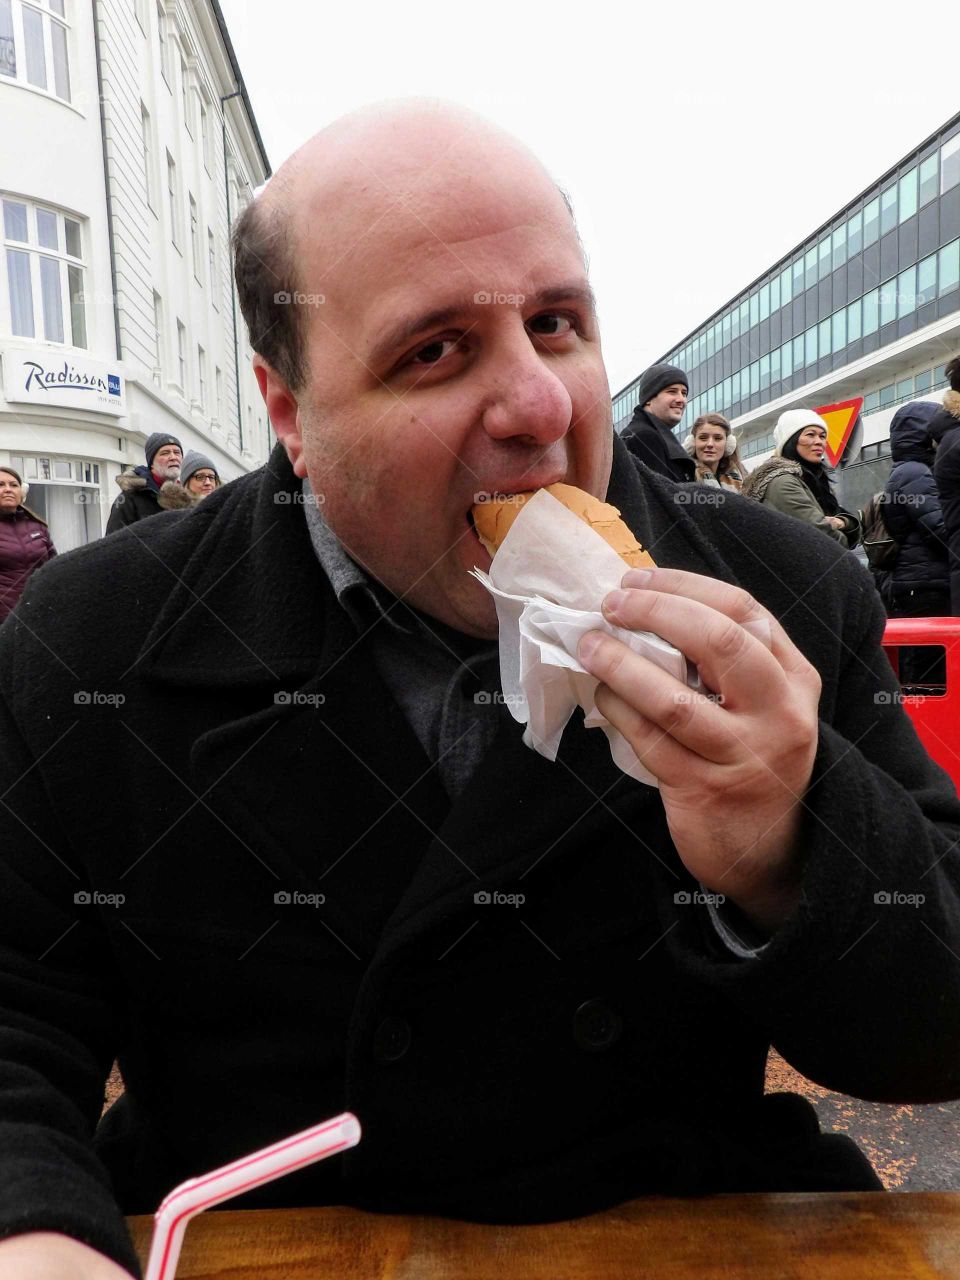 Man eating a hotdog